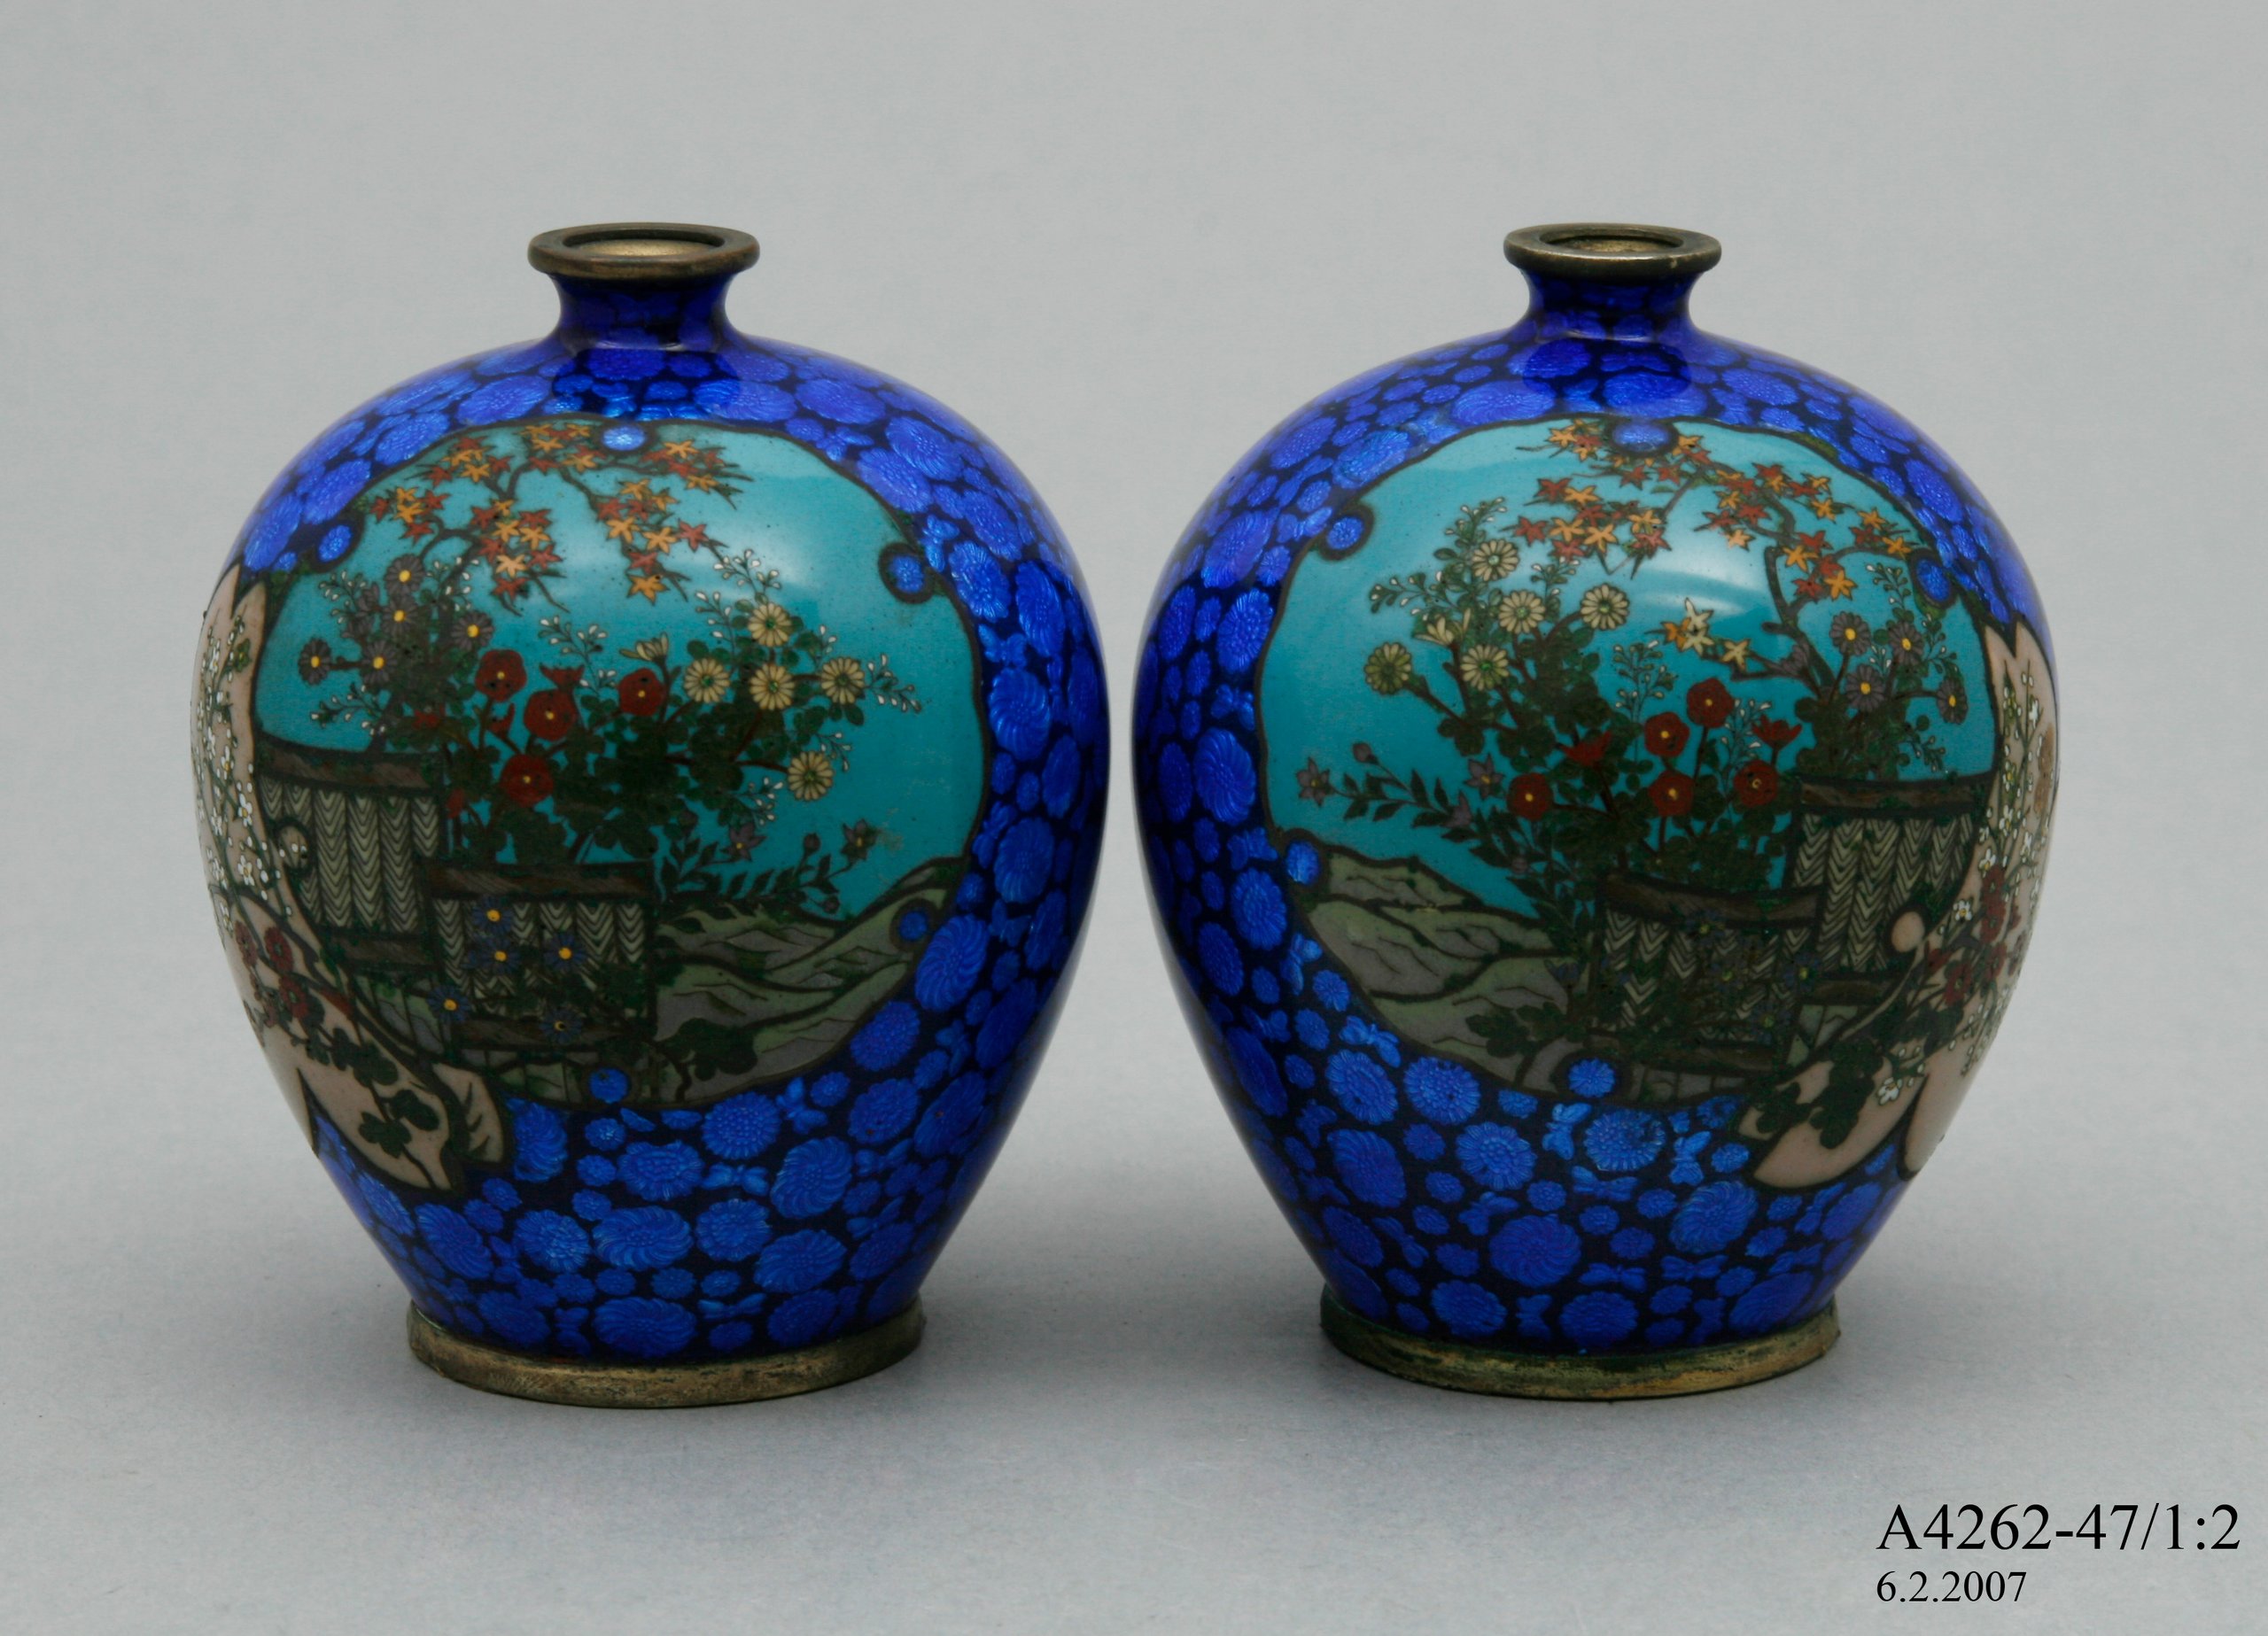 Two cloisonne vases each featuring a landscape scene.